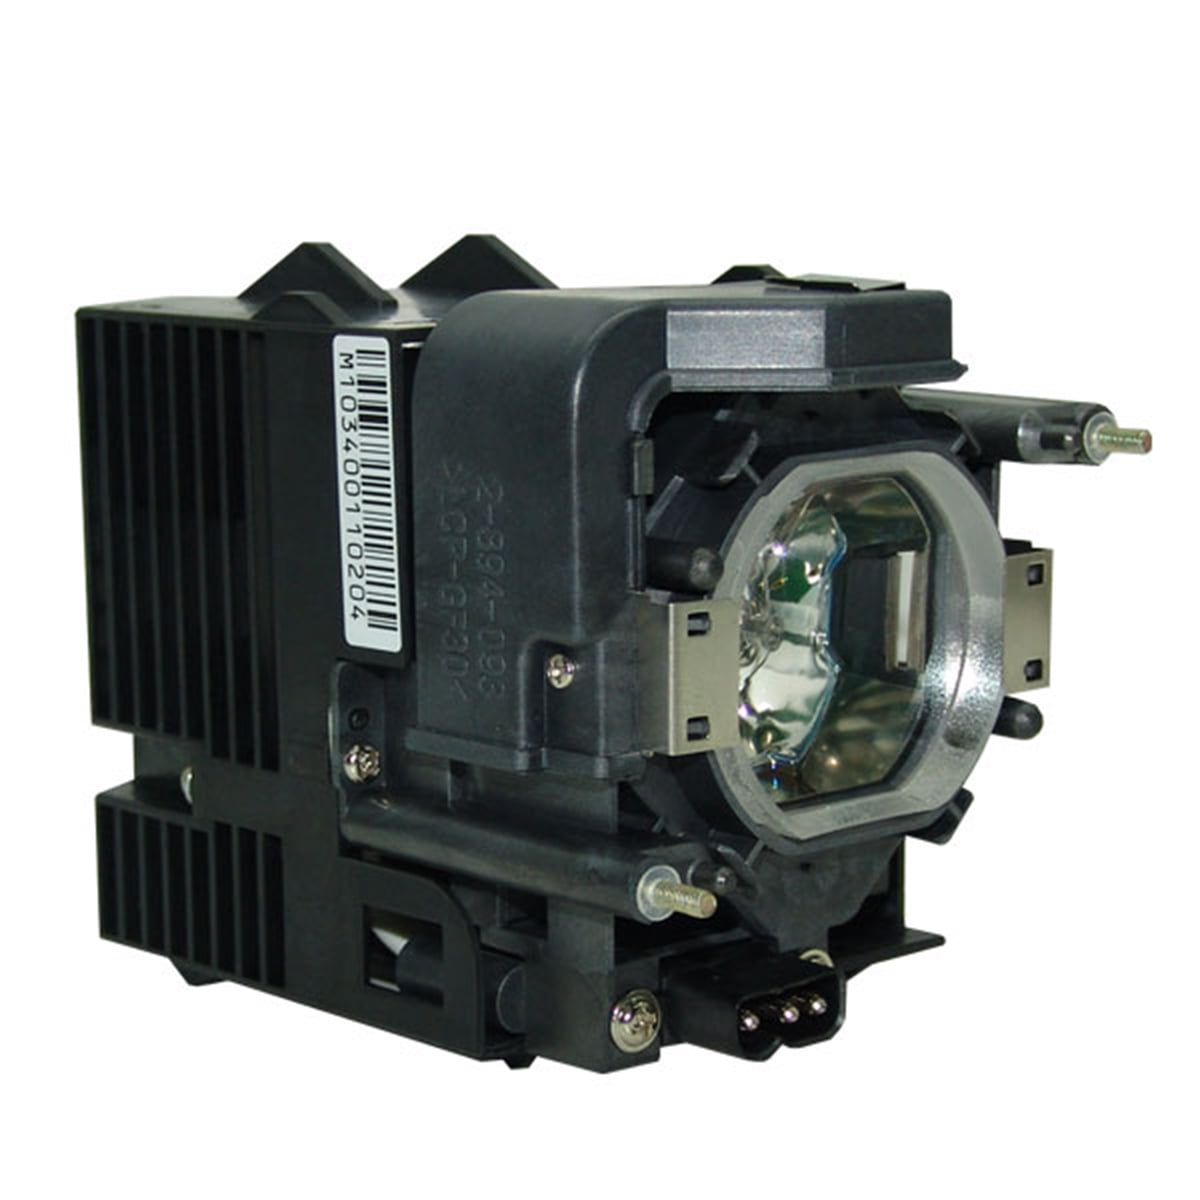 Air Filter for Sony Projector VPL-FE40 VPL-FE40L VPL-FW41 